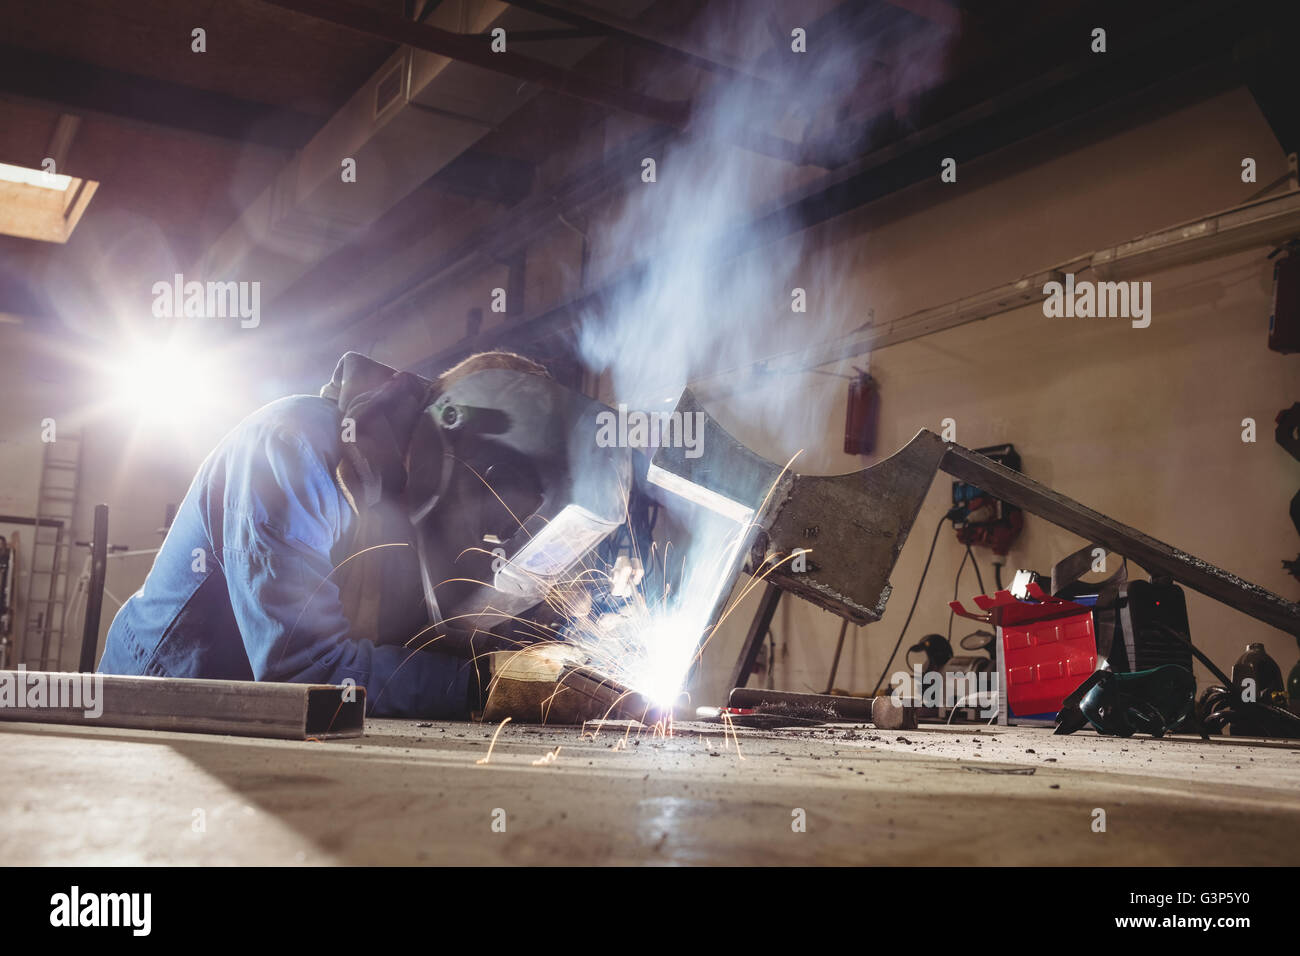 Welder cutting metal with grinder Stock Photo